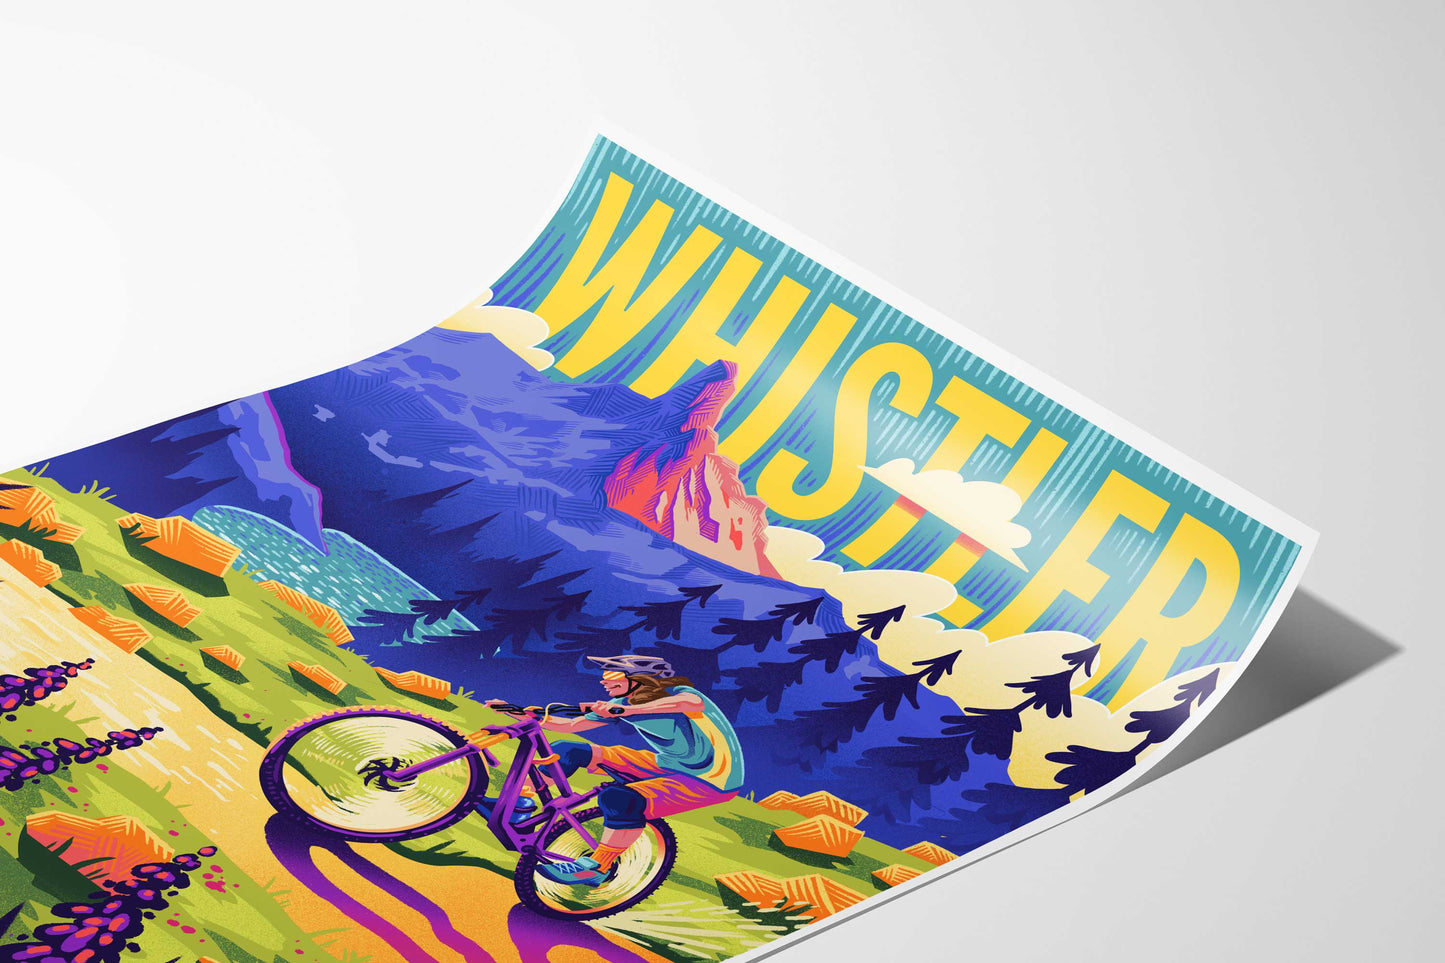 Whistler Mountain Biking Travel Art Print